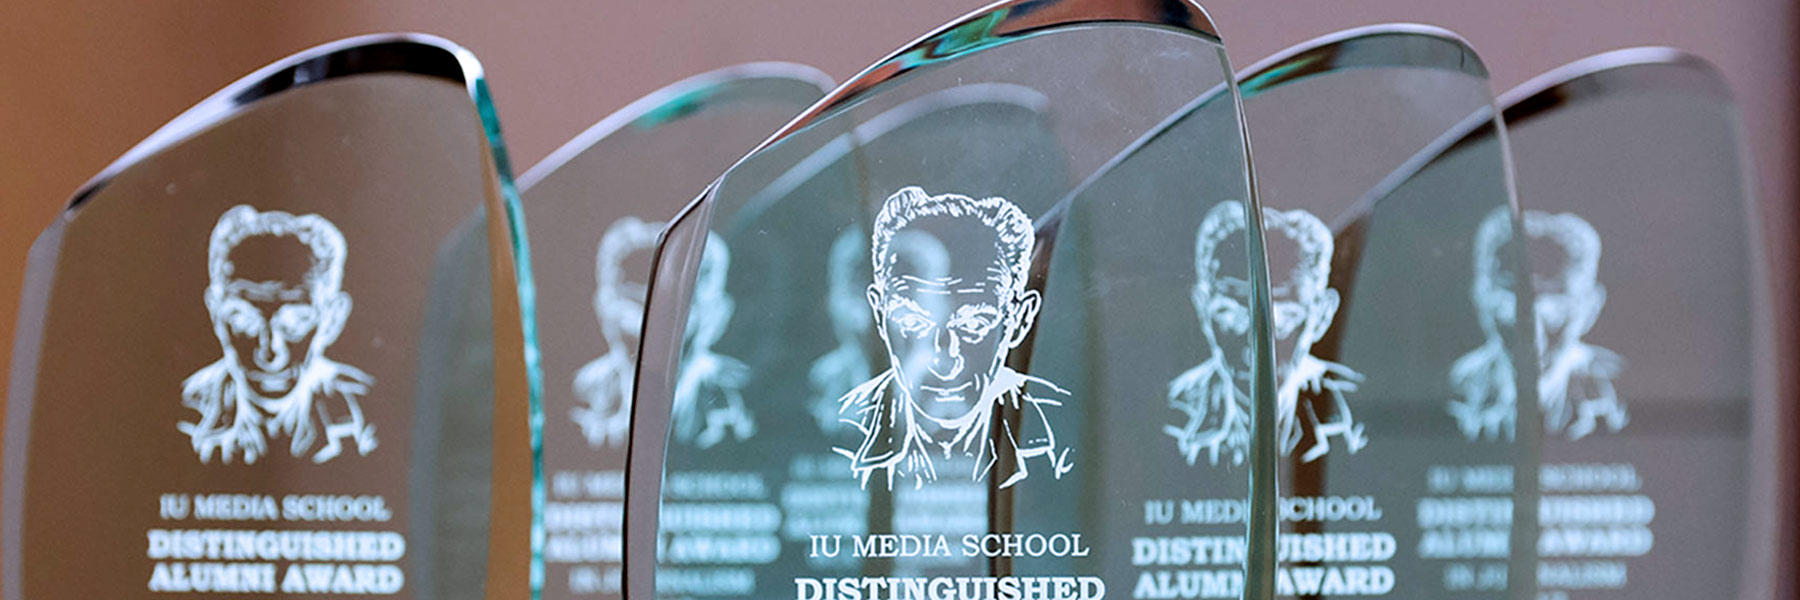 Six Distinguished Alumni Award engraved glass plaques